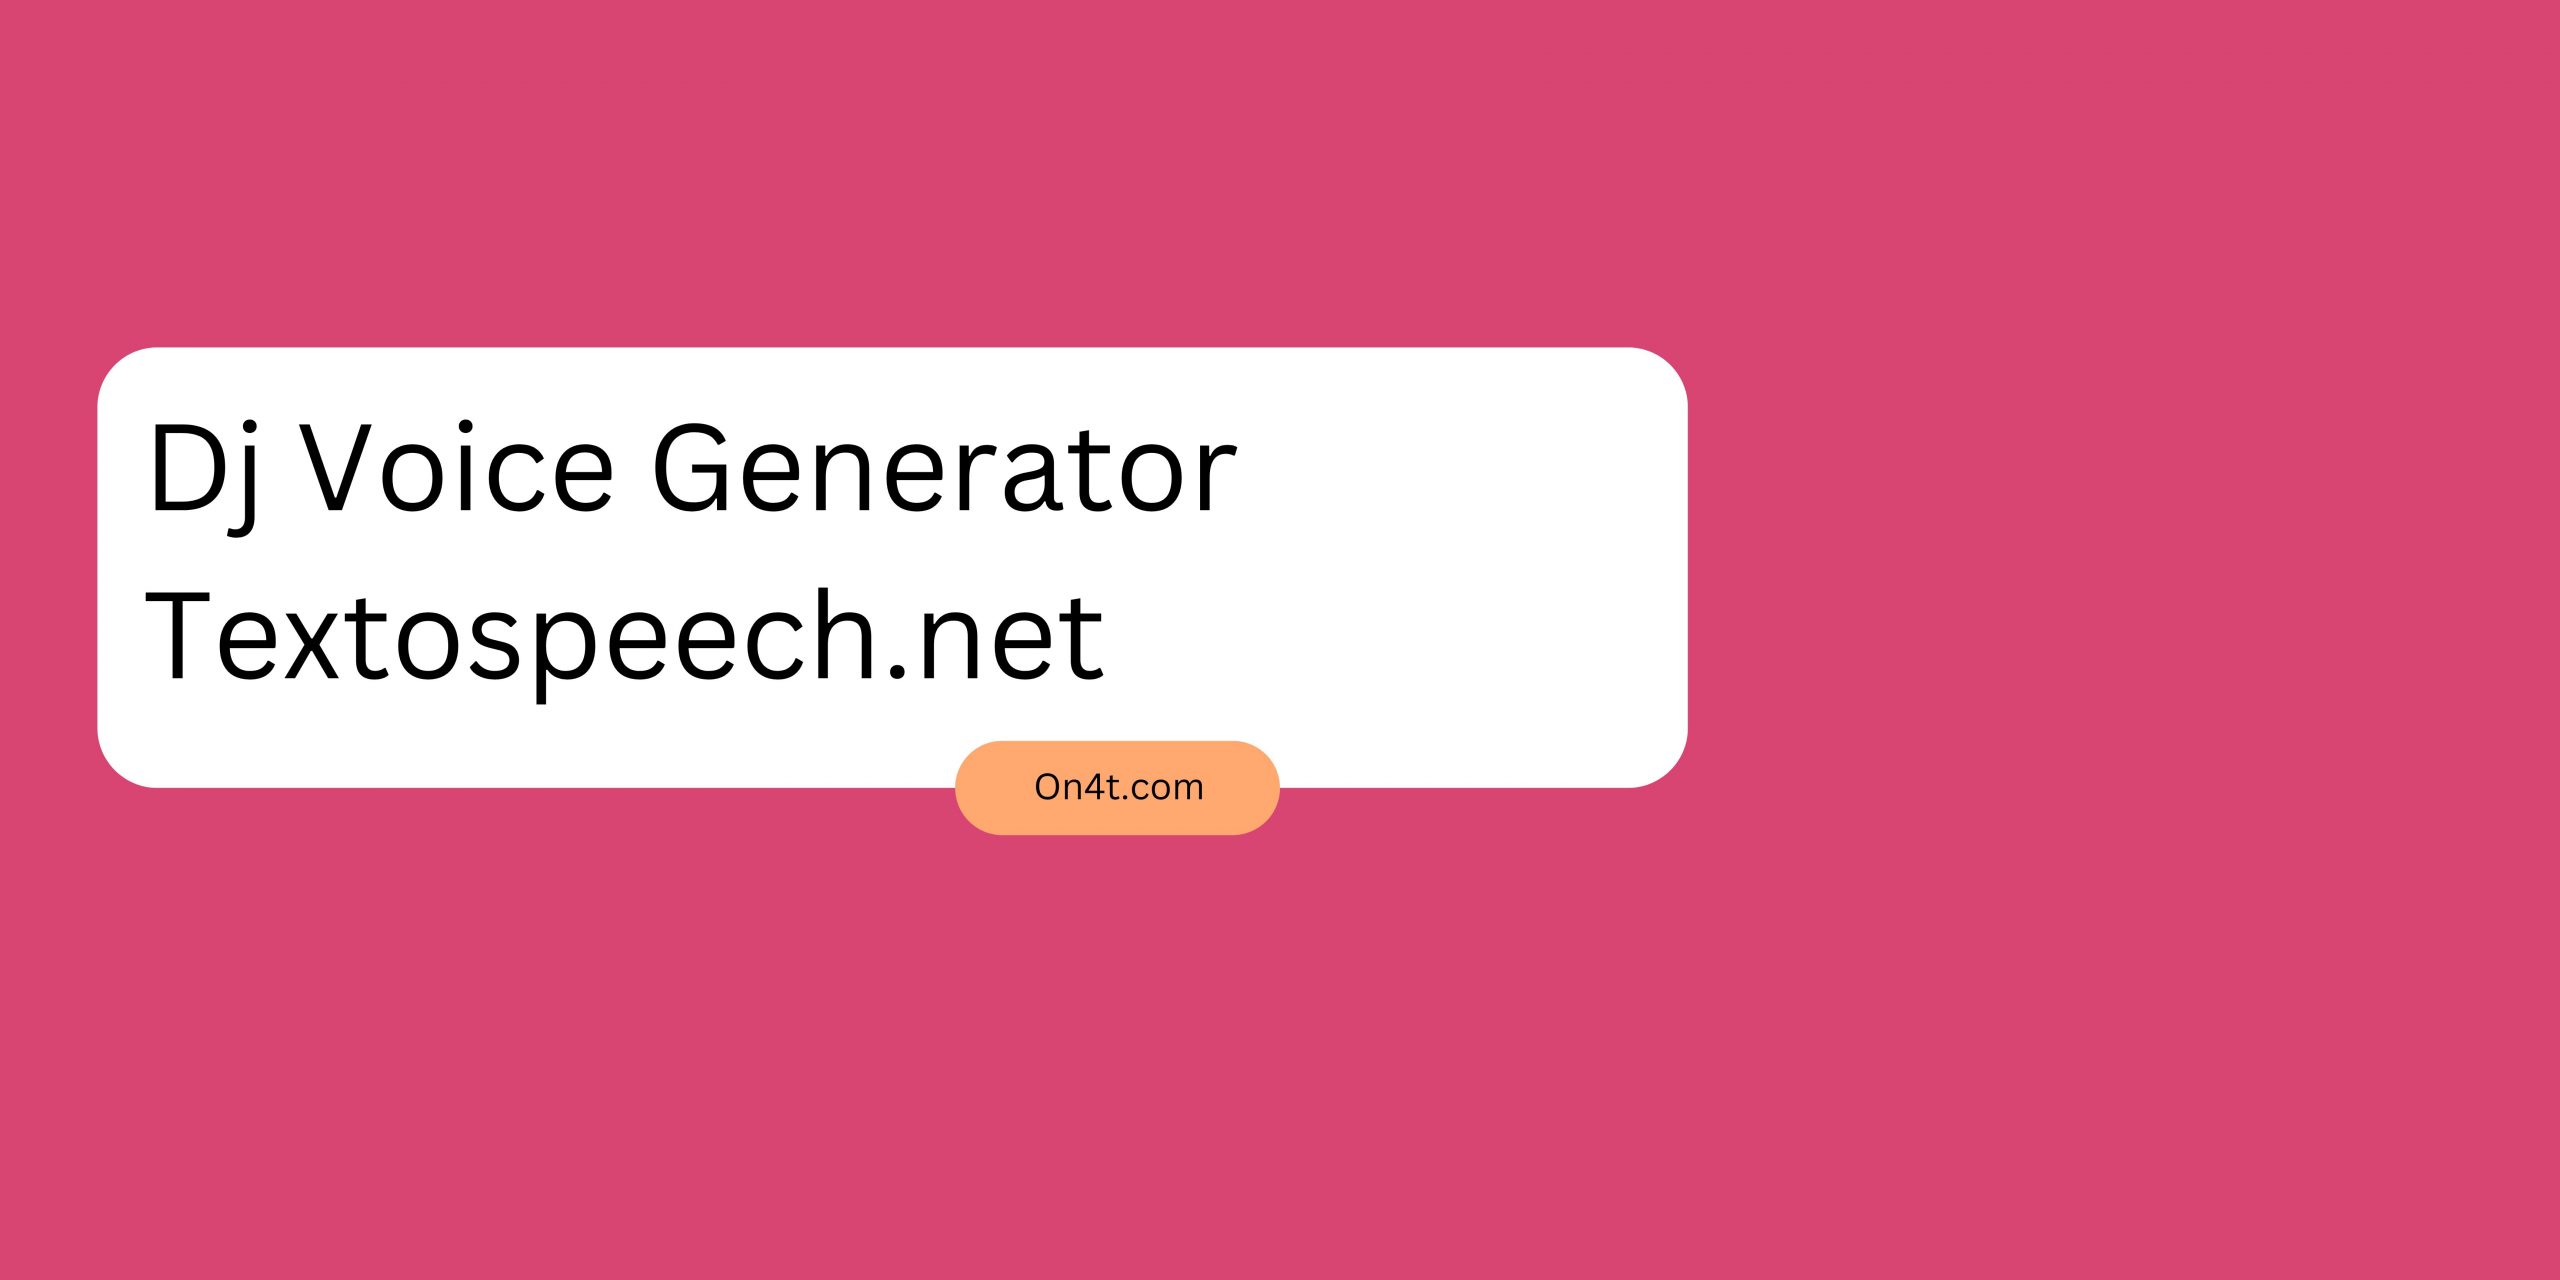 Dj Voice Generator Textospeech.net